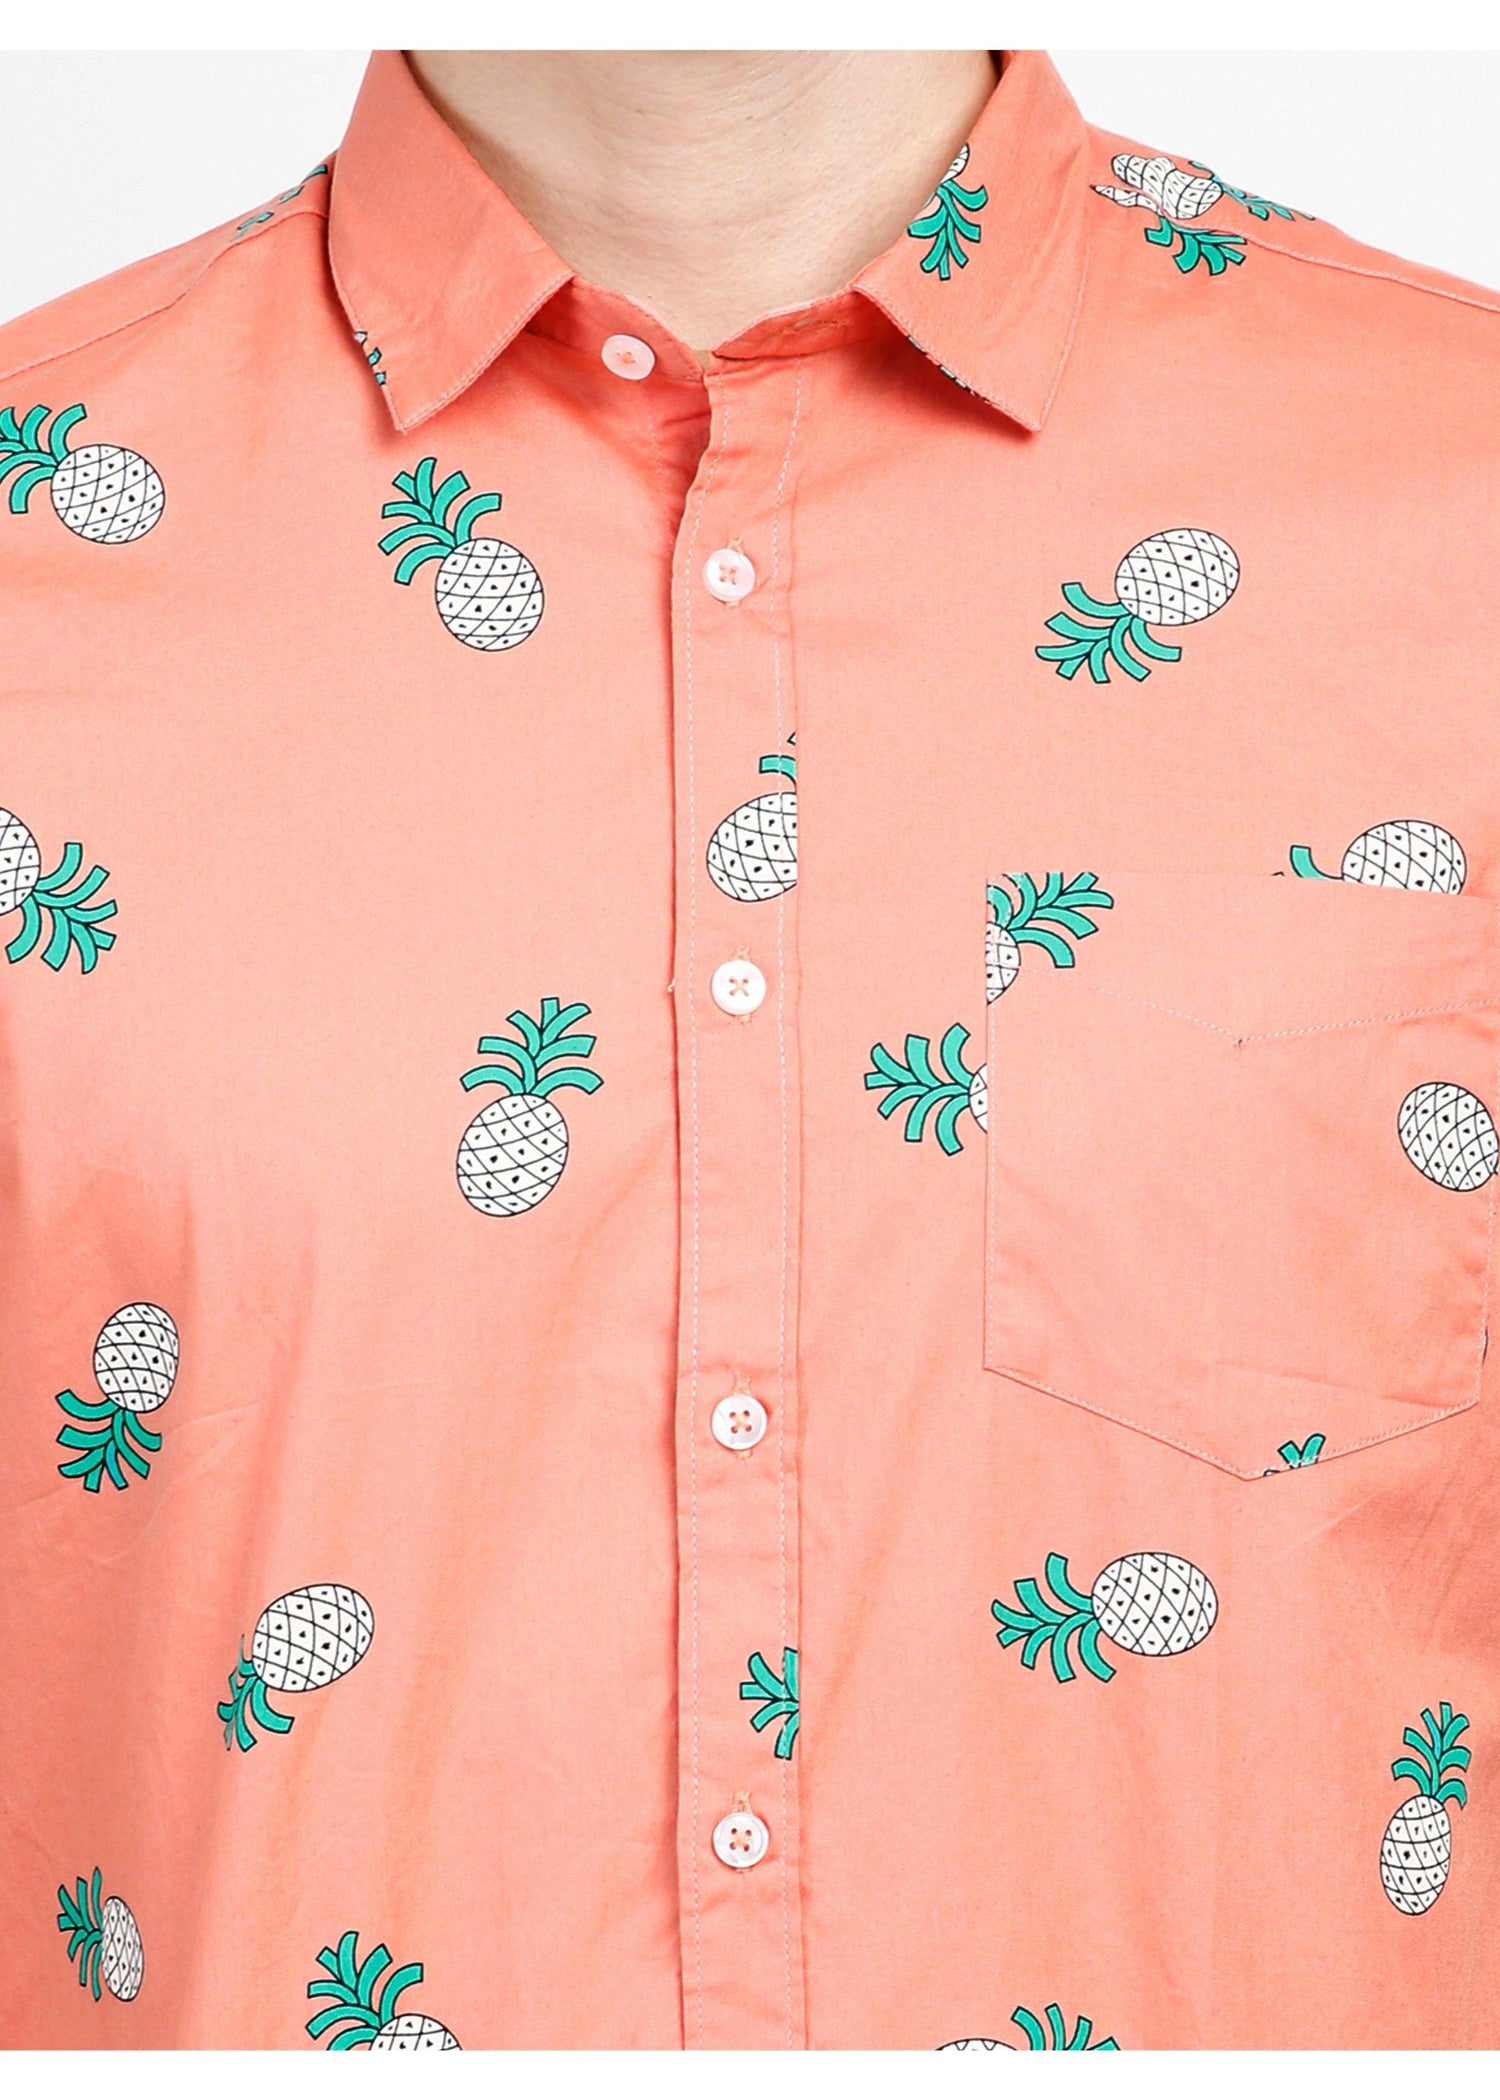 Tusok-pink-pineappleFeatured Shirt, Vacation-Printed Shirtimage-Peach Pineapple (4)